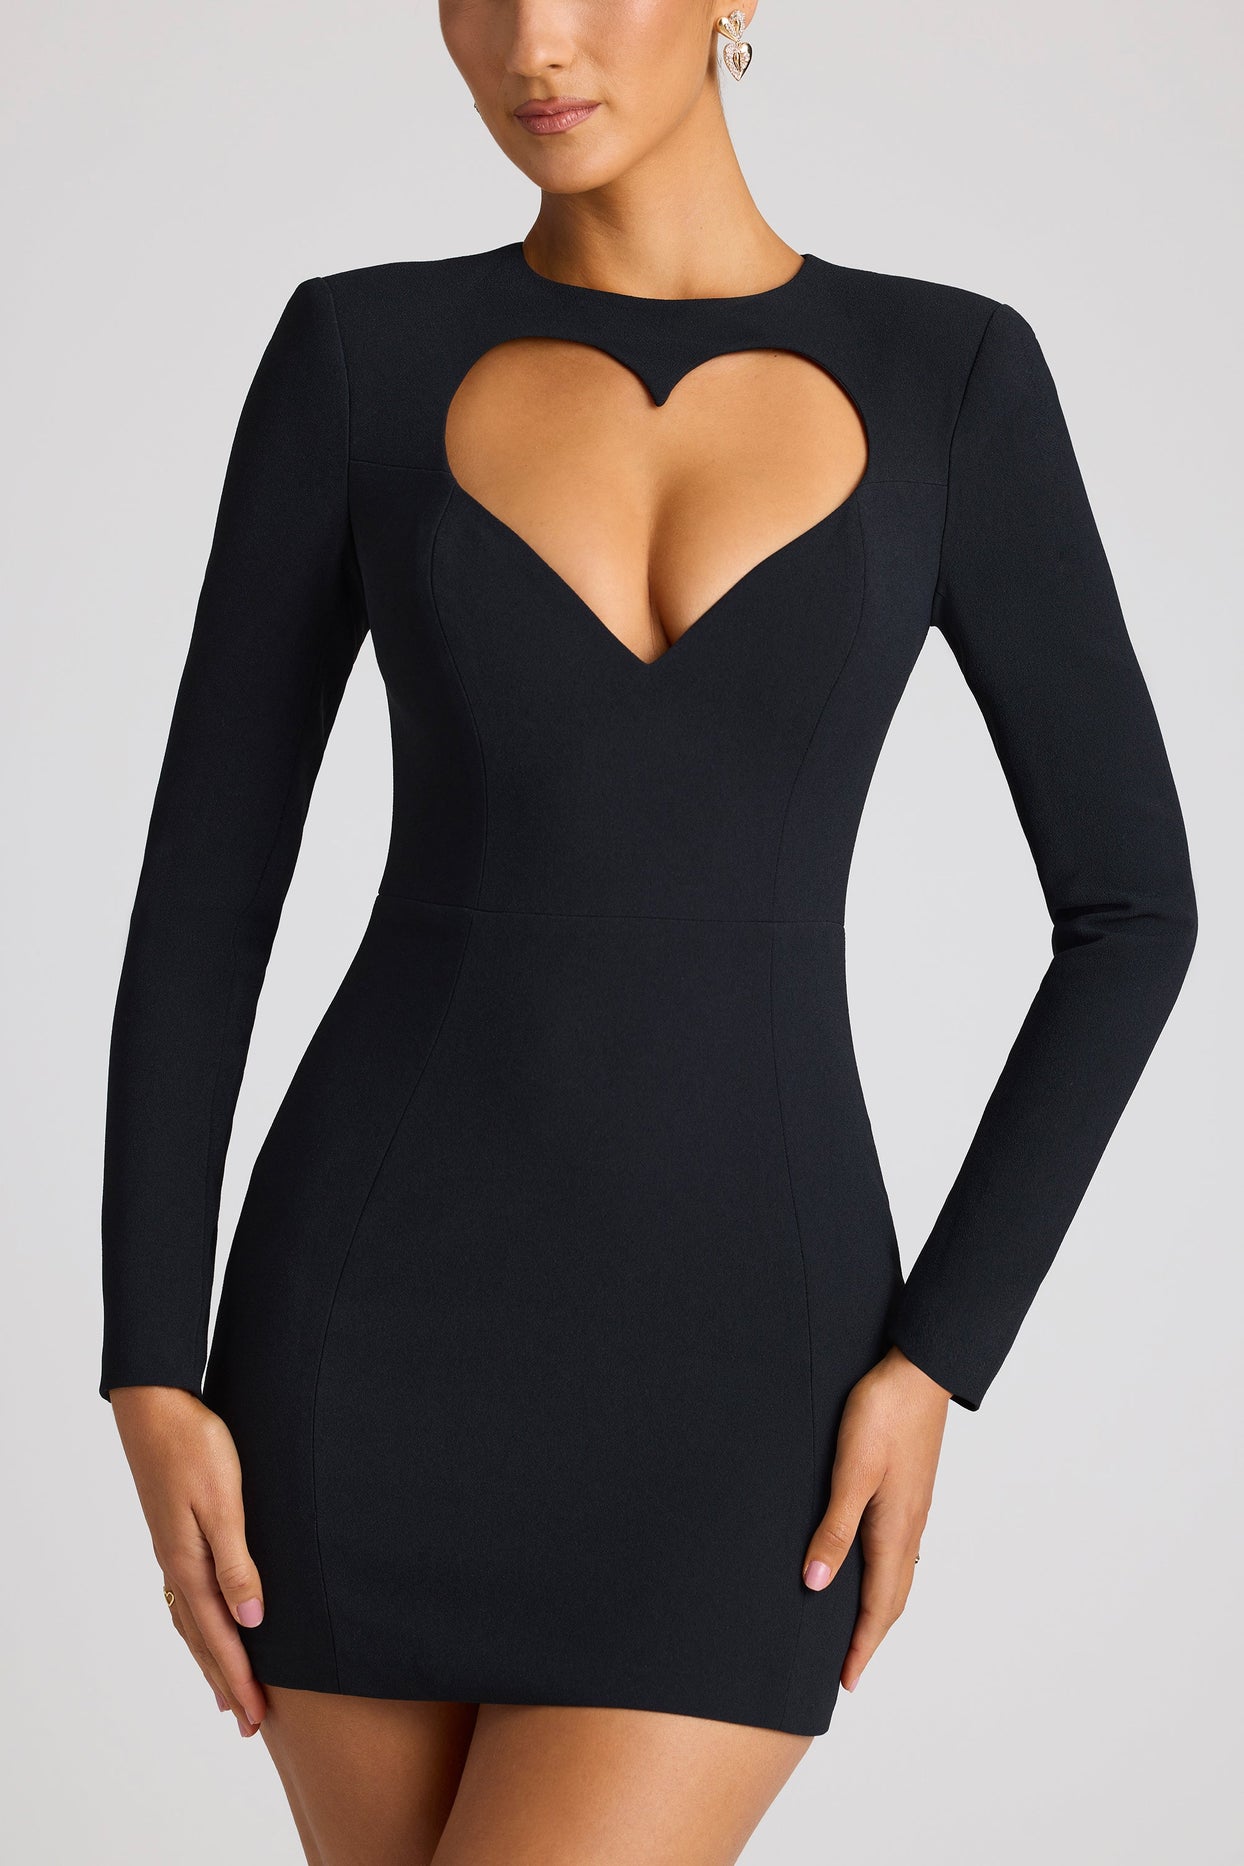 Luciana Heart Cut Out Long Sleeve Mini Dress in Black